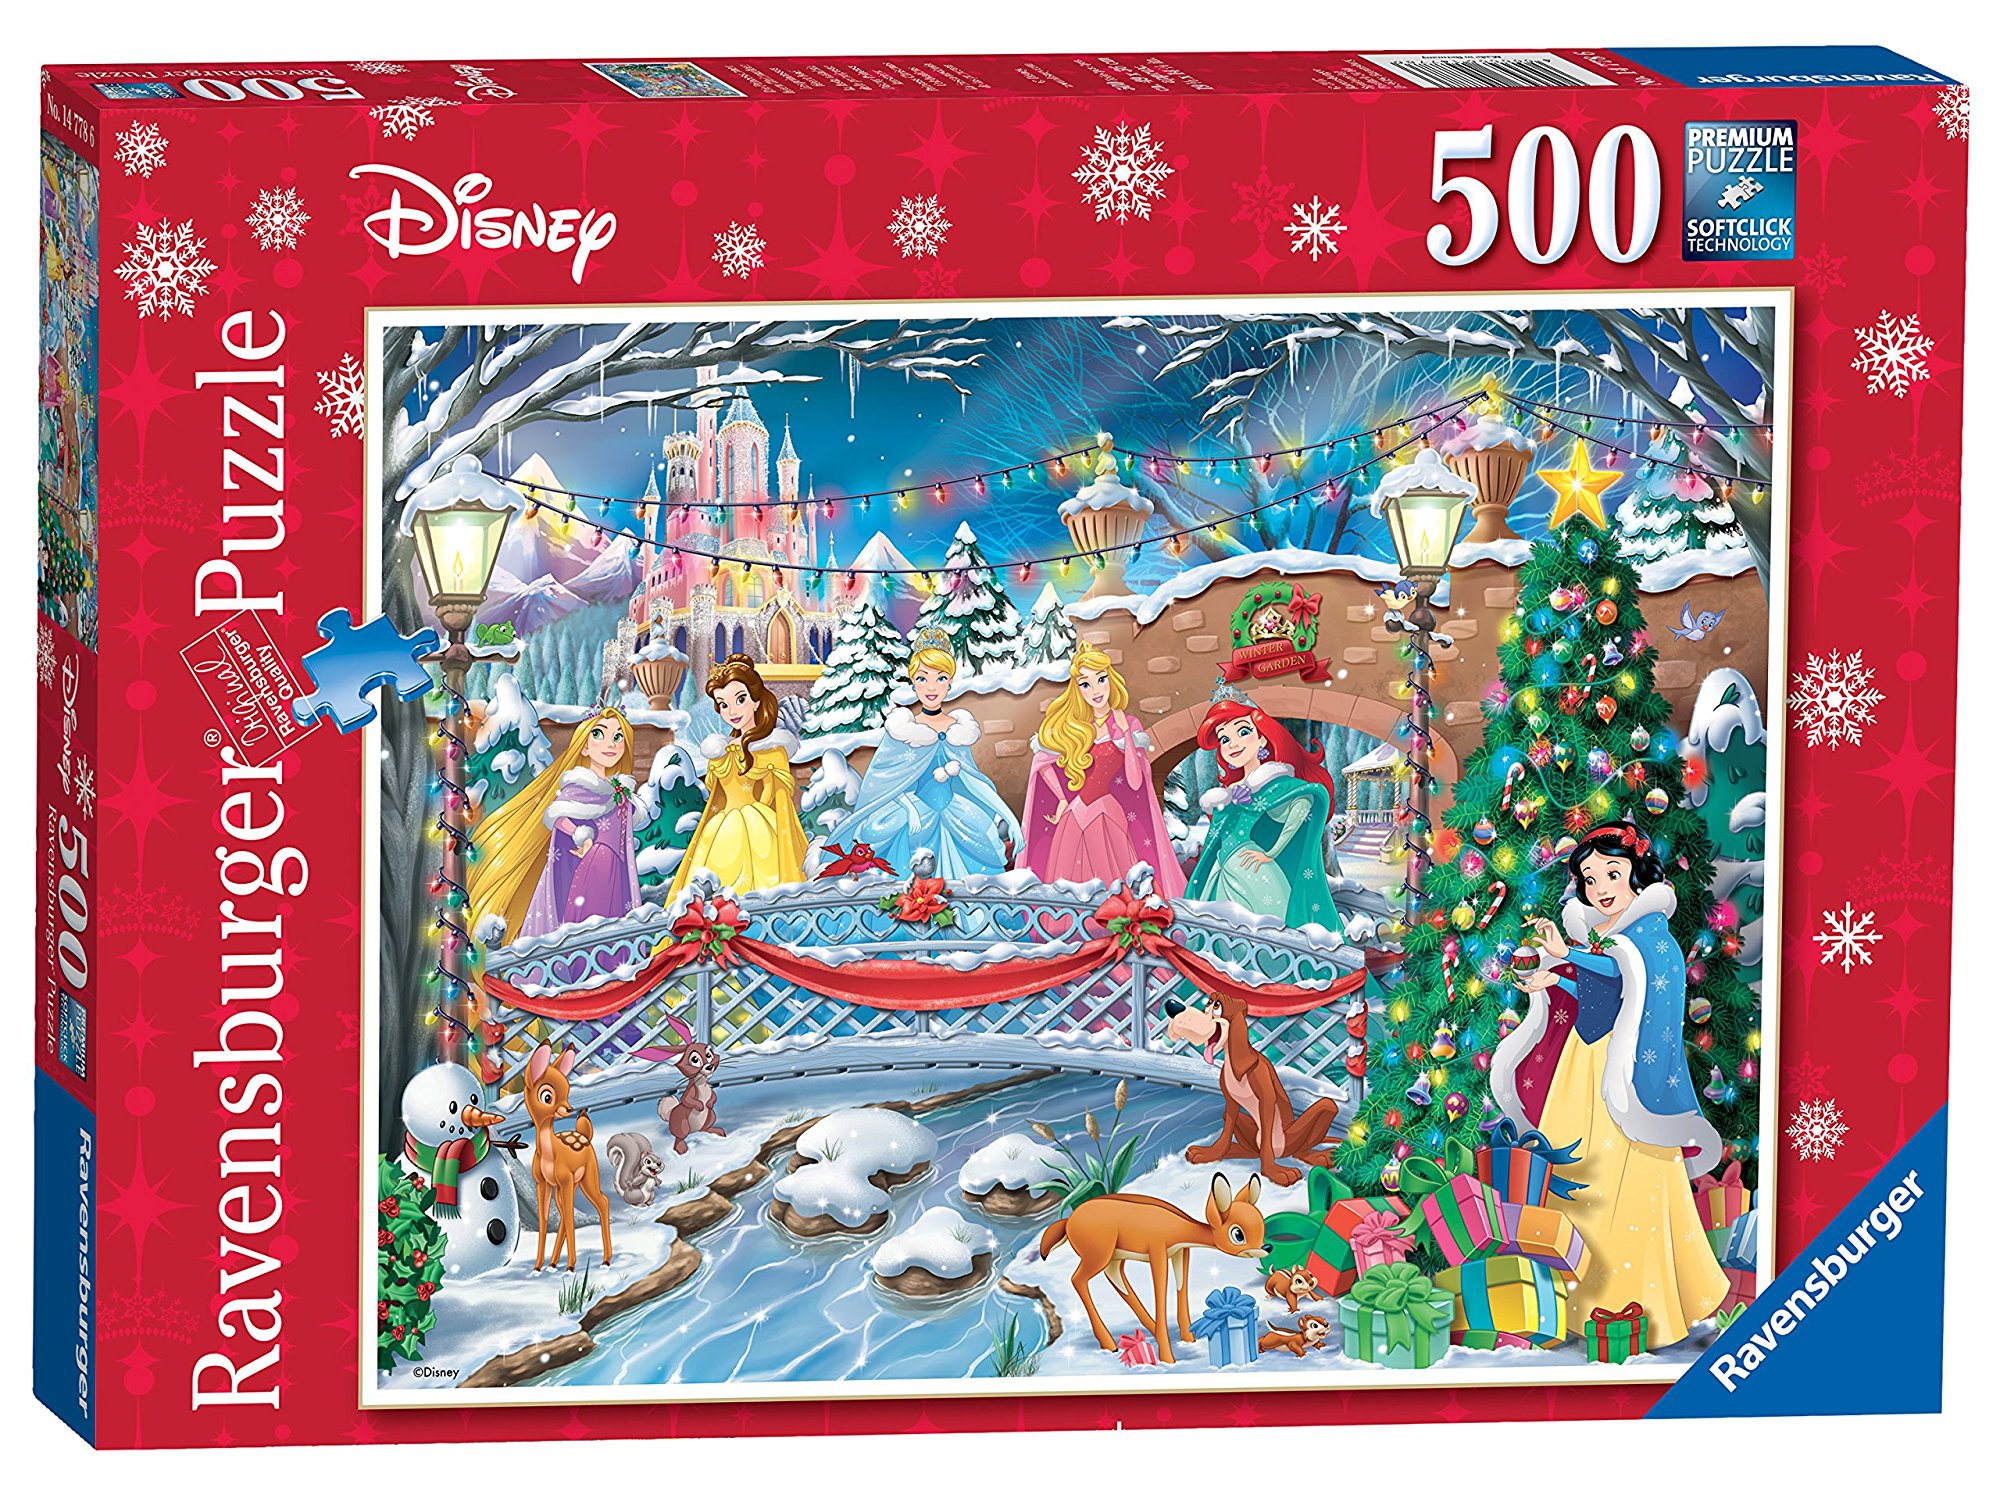 Disney Princess 'Christmas Celebrations' 500 Piece Jigsaw Puzzle Game